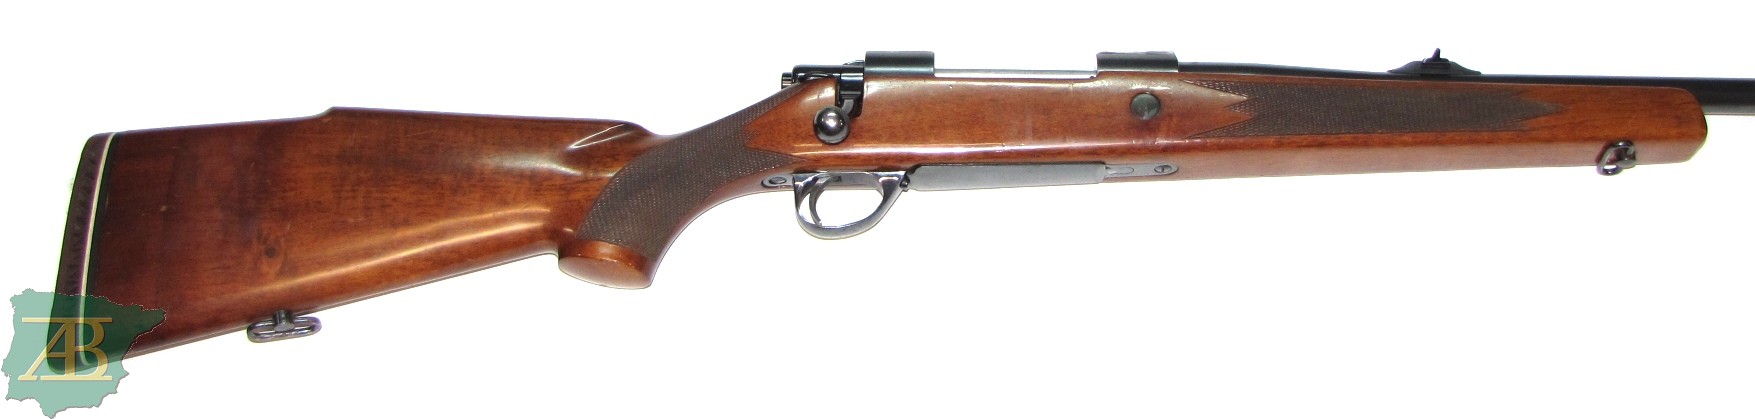 Rifle de cerrojo de caza SAKO L61R Ref 6890-armeriaiberica-2